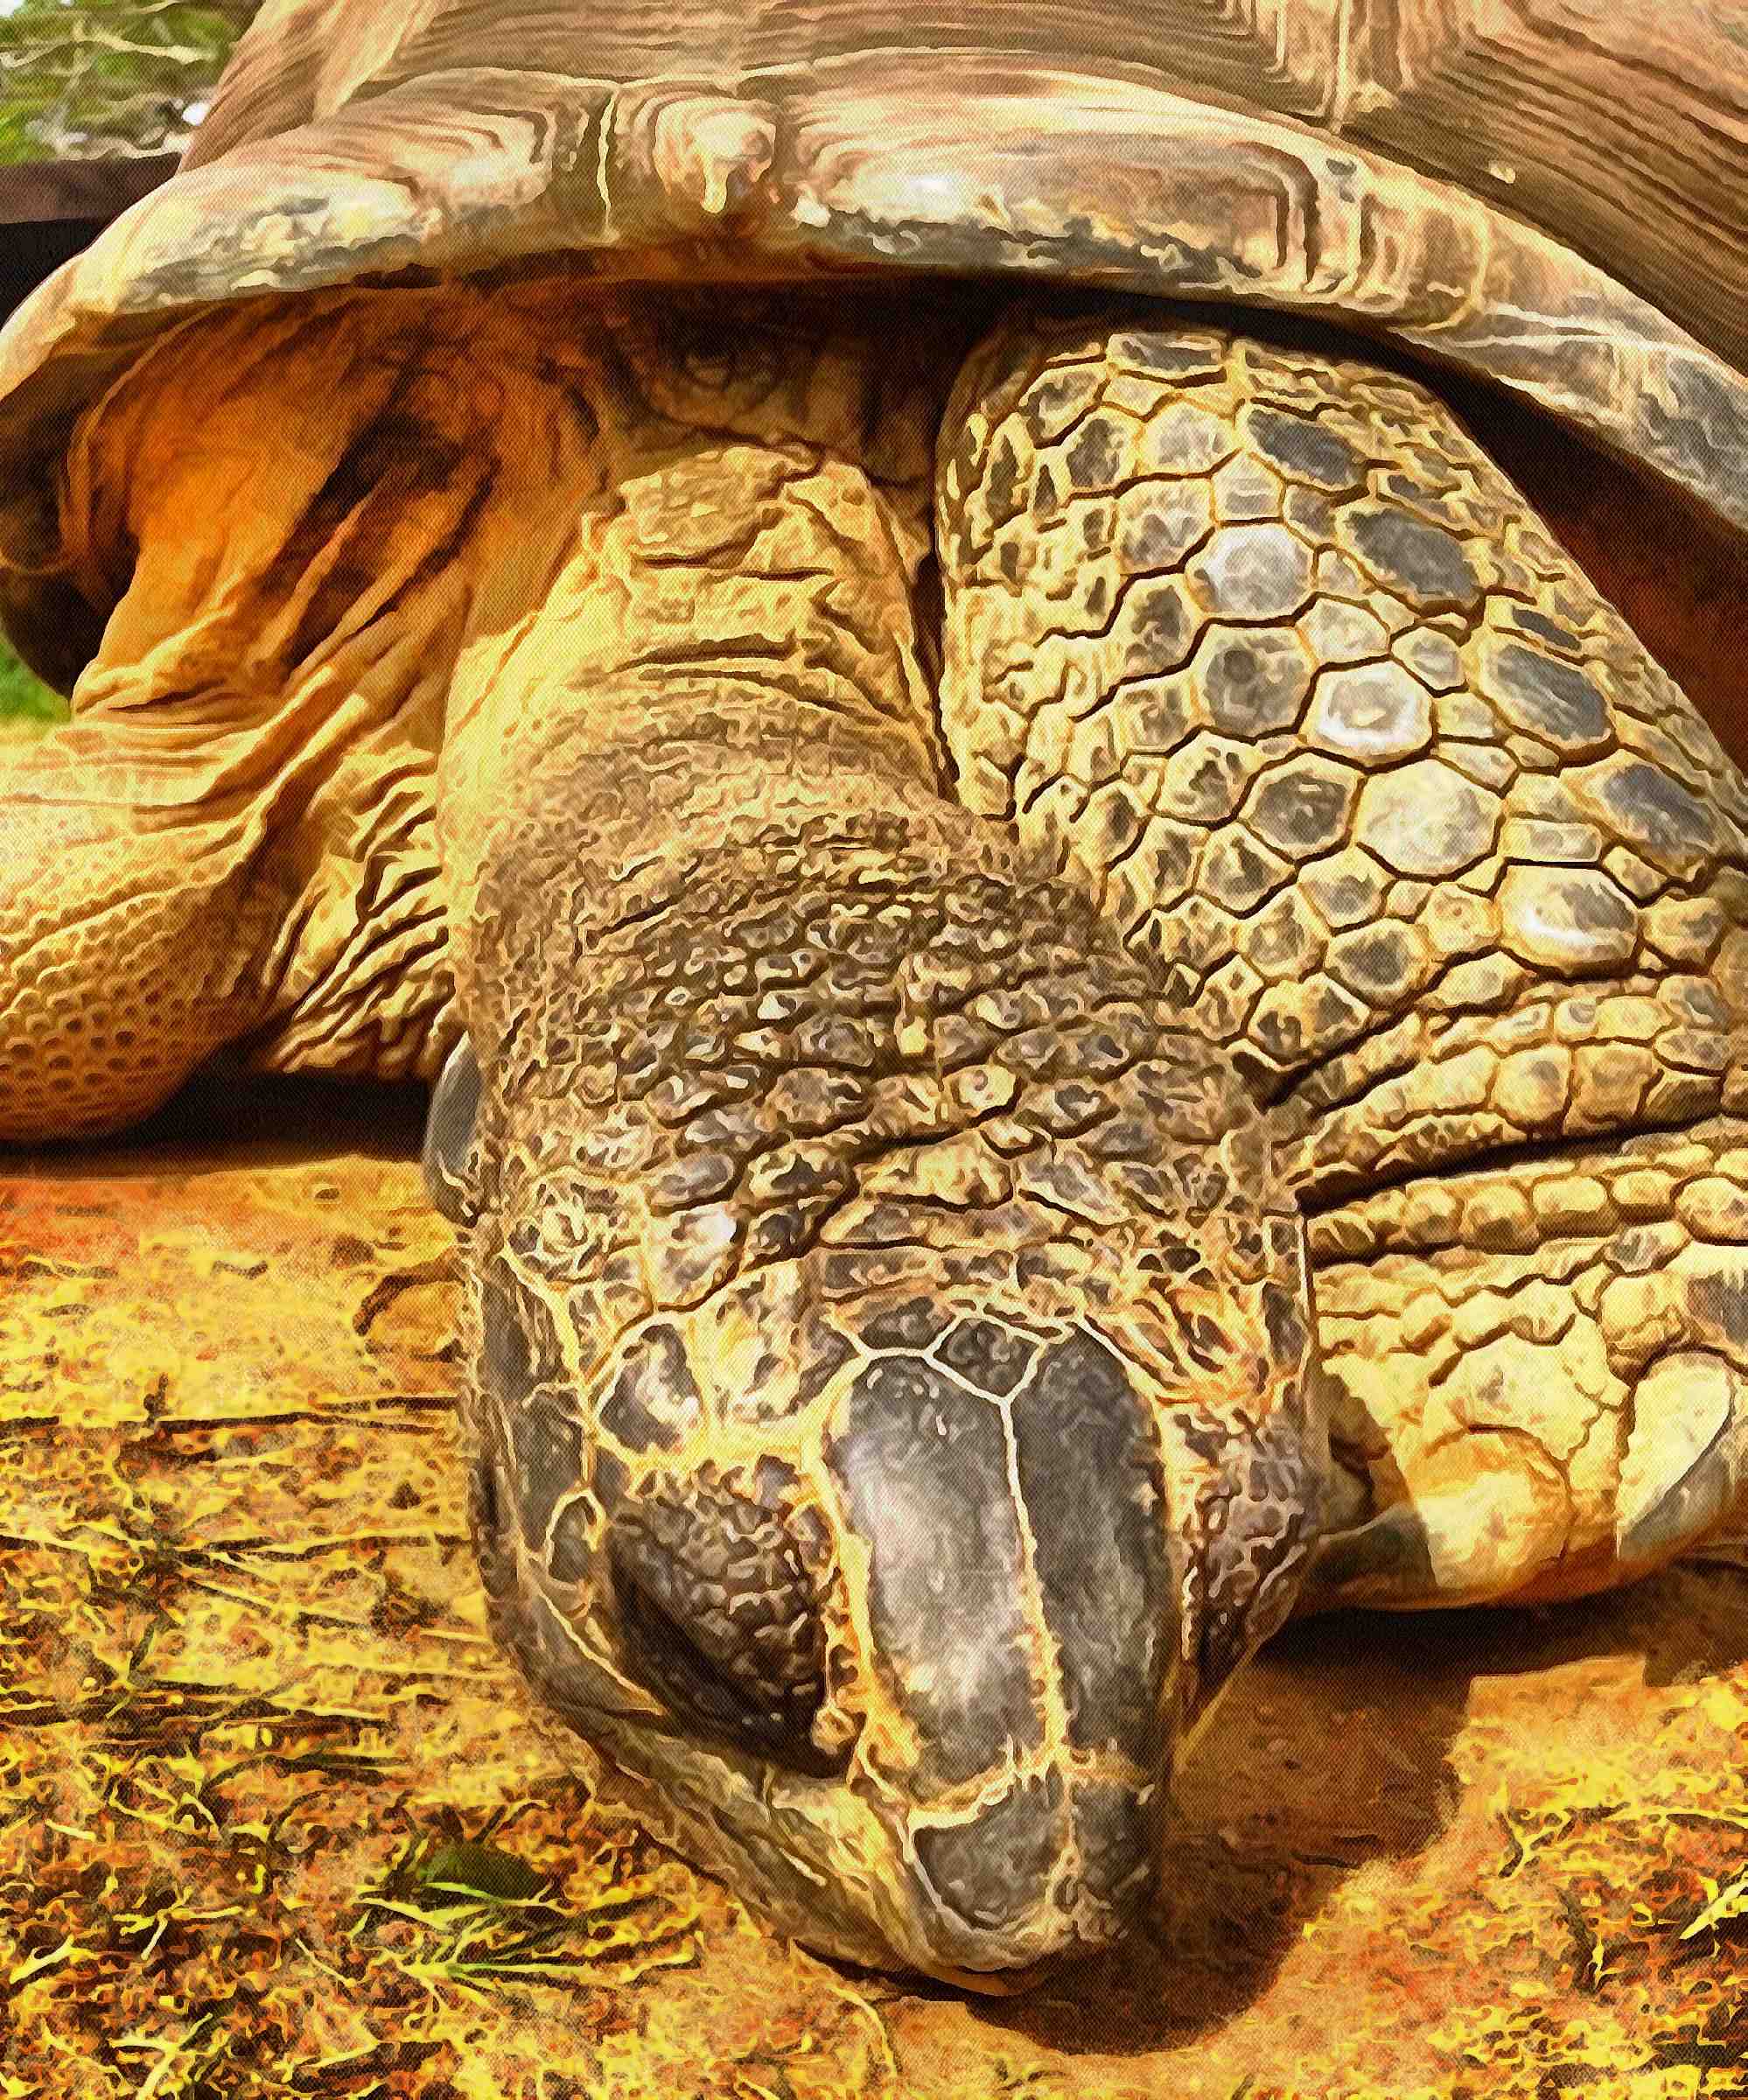 Turtle, tortoise,  loggerhead, terrapin, chelonian, leatherback, – Turtle free images, Tortoise free images, Turtle stock free images, Download free images turtles, turtle public domain images, tortoise public domain images!